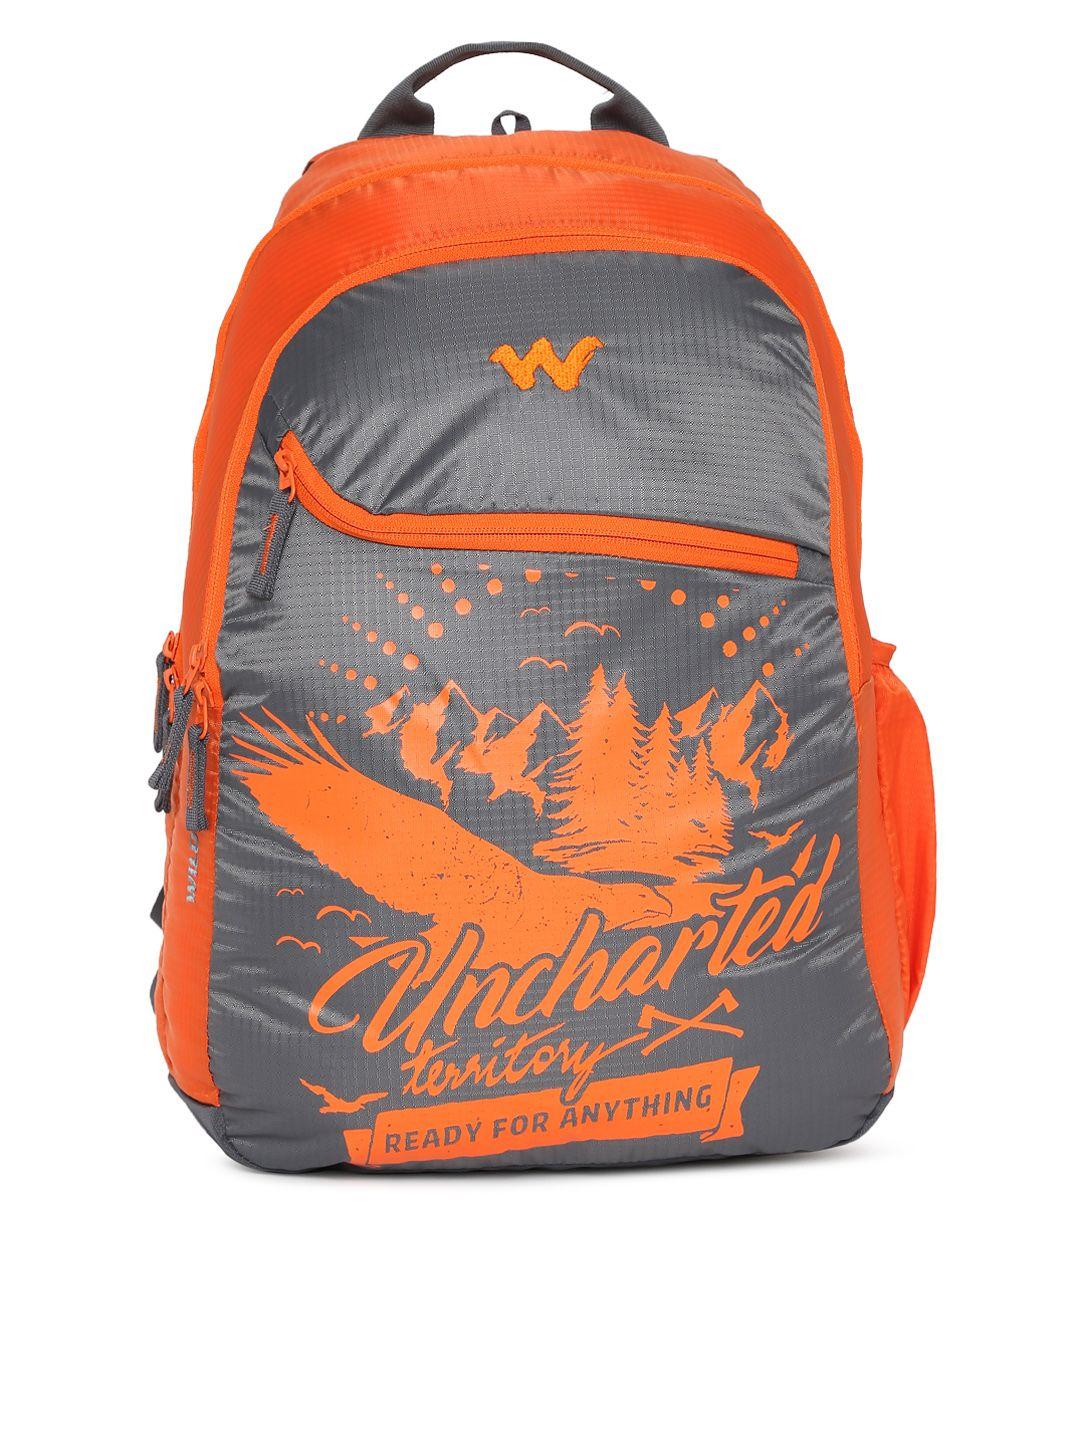 wildcraft 3 wild unisex orange & grey graphic backpack